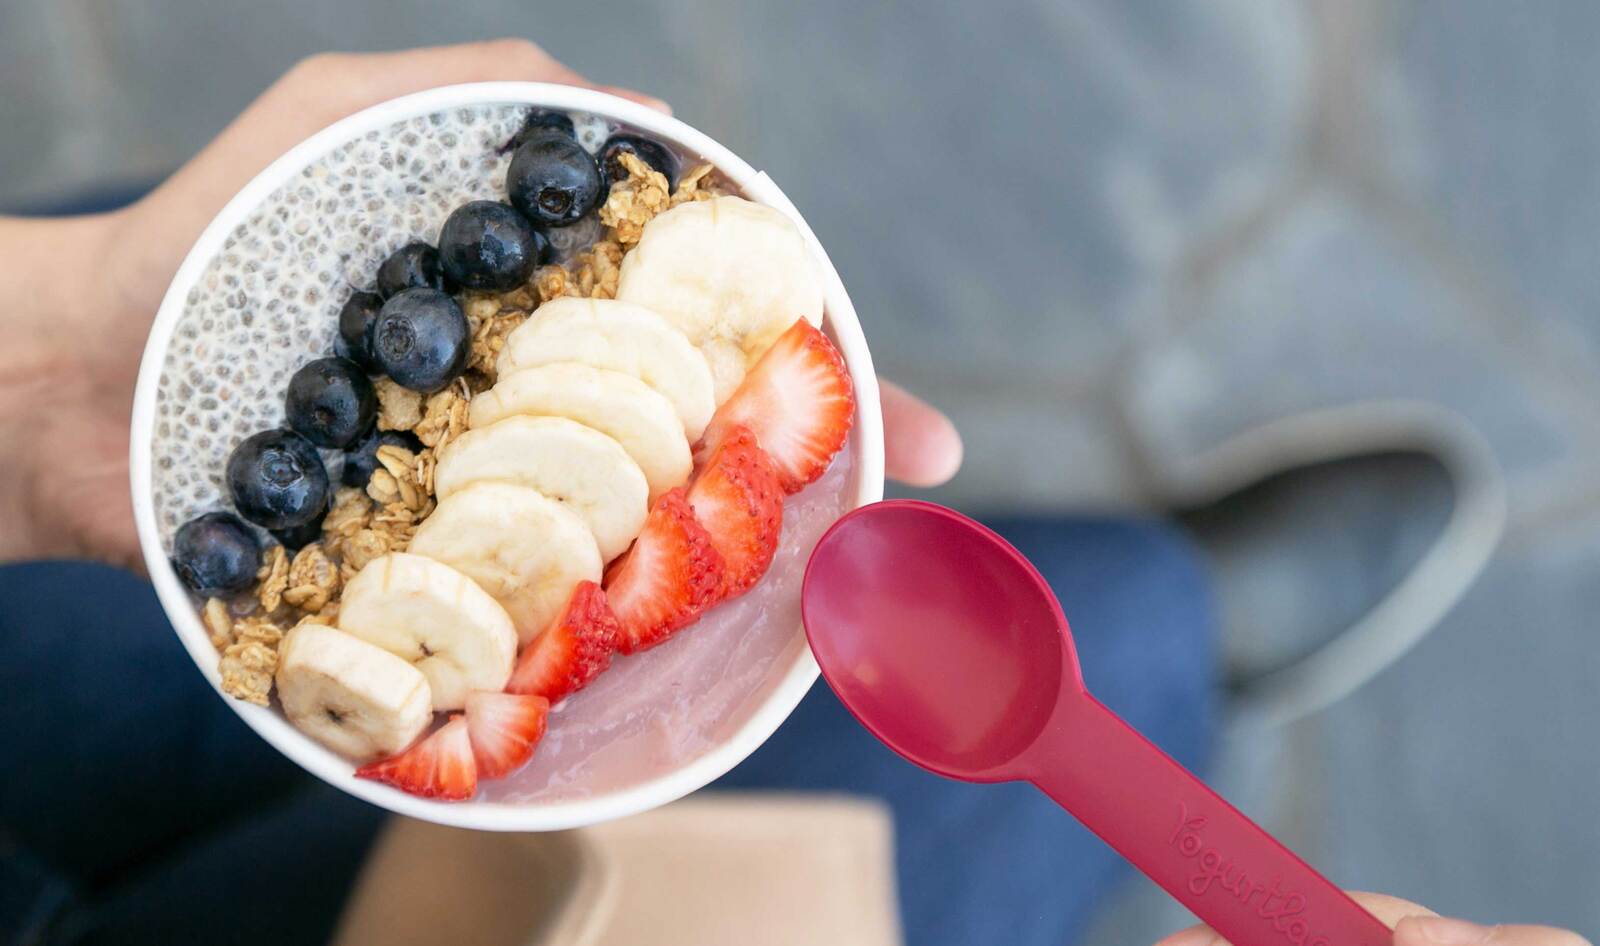 Yogurtland Launches Vegan Smoothie Bowls Nationwide